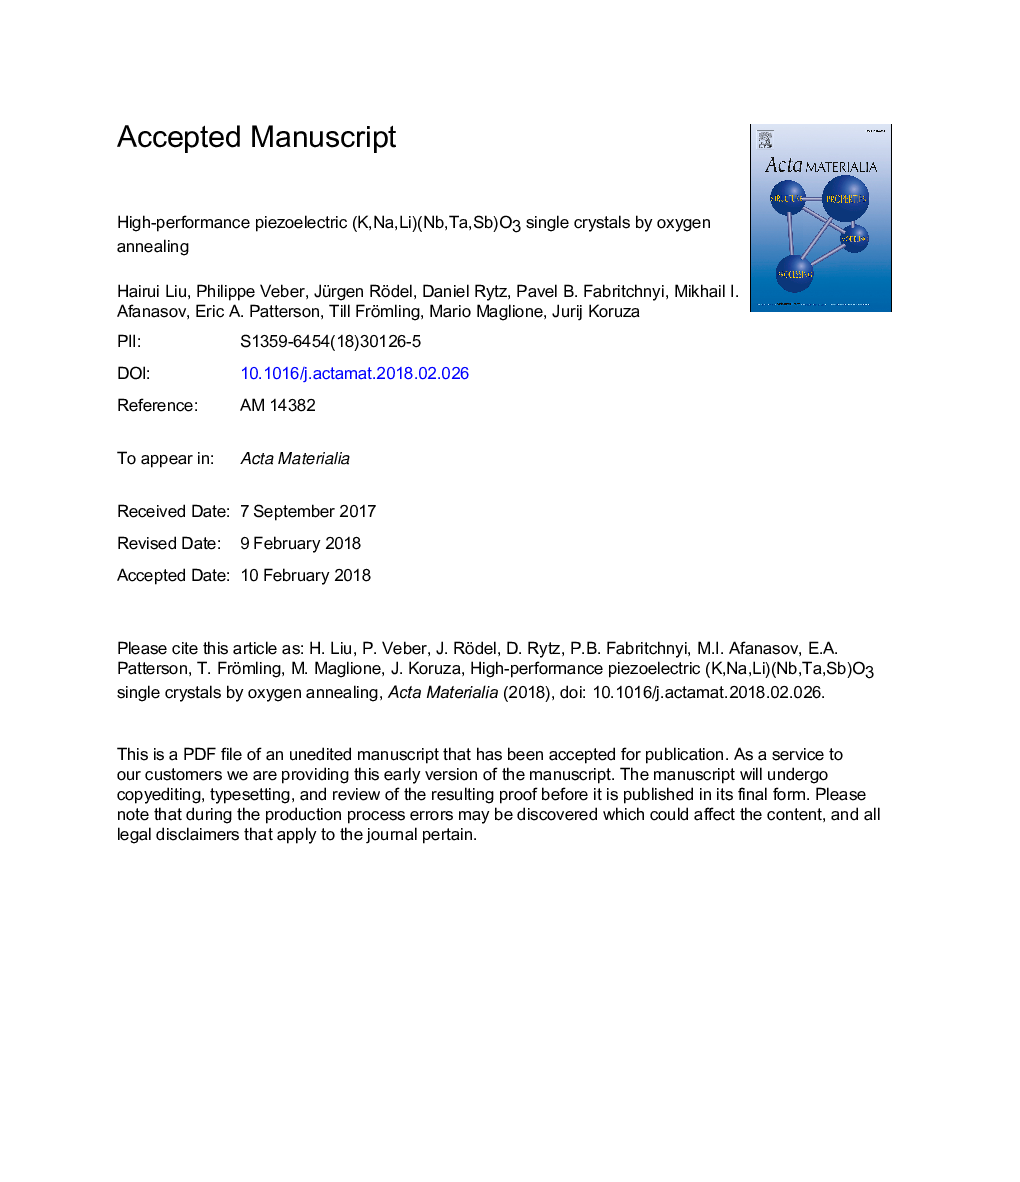 High-performance piezoelectric (K,Na,Li)(Nb,Ta,Sb)O3 single crystals by oxygen annealing